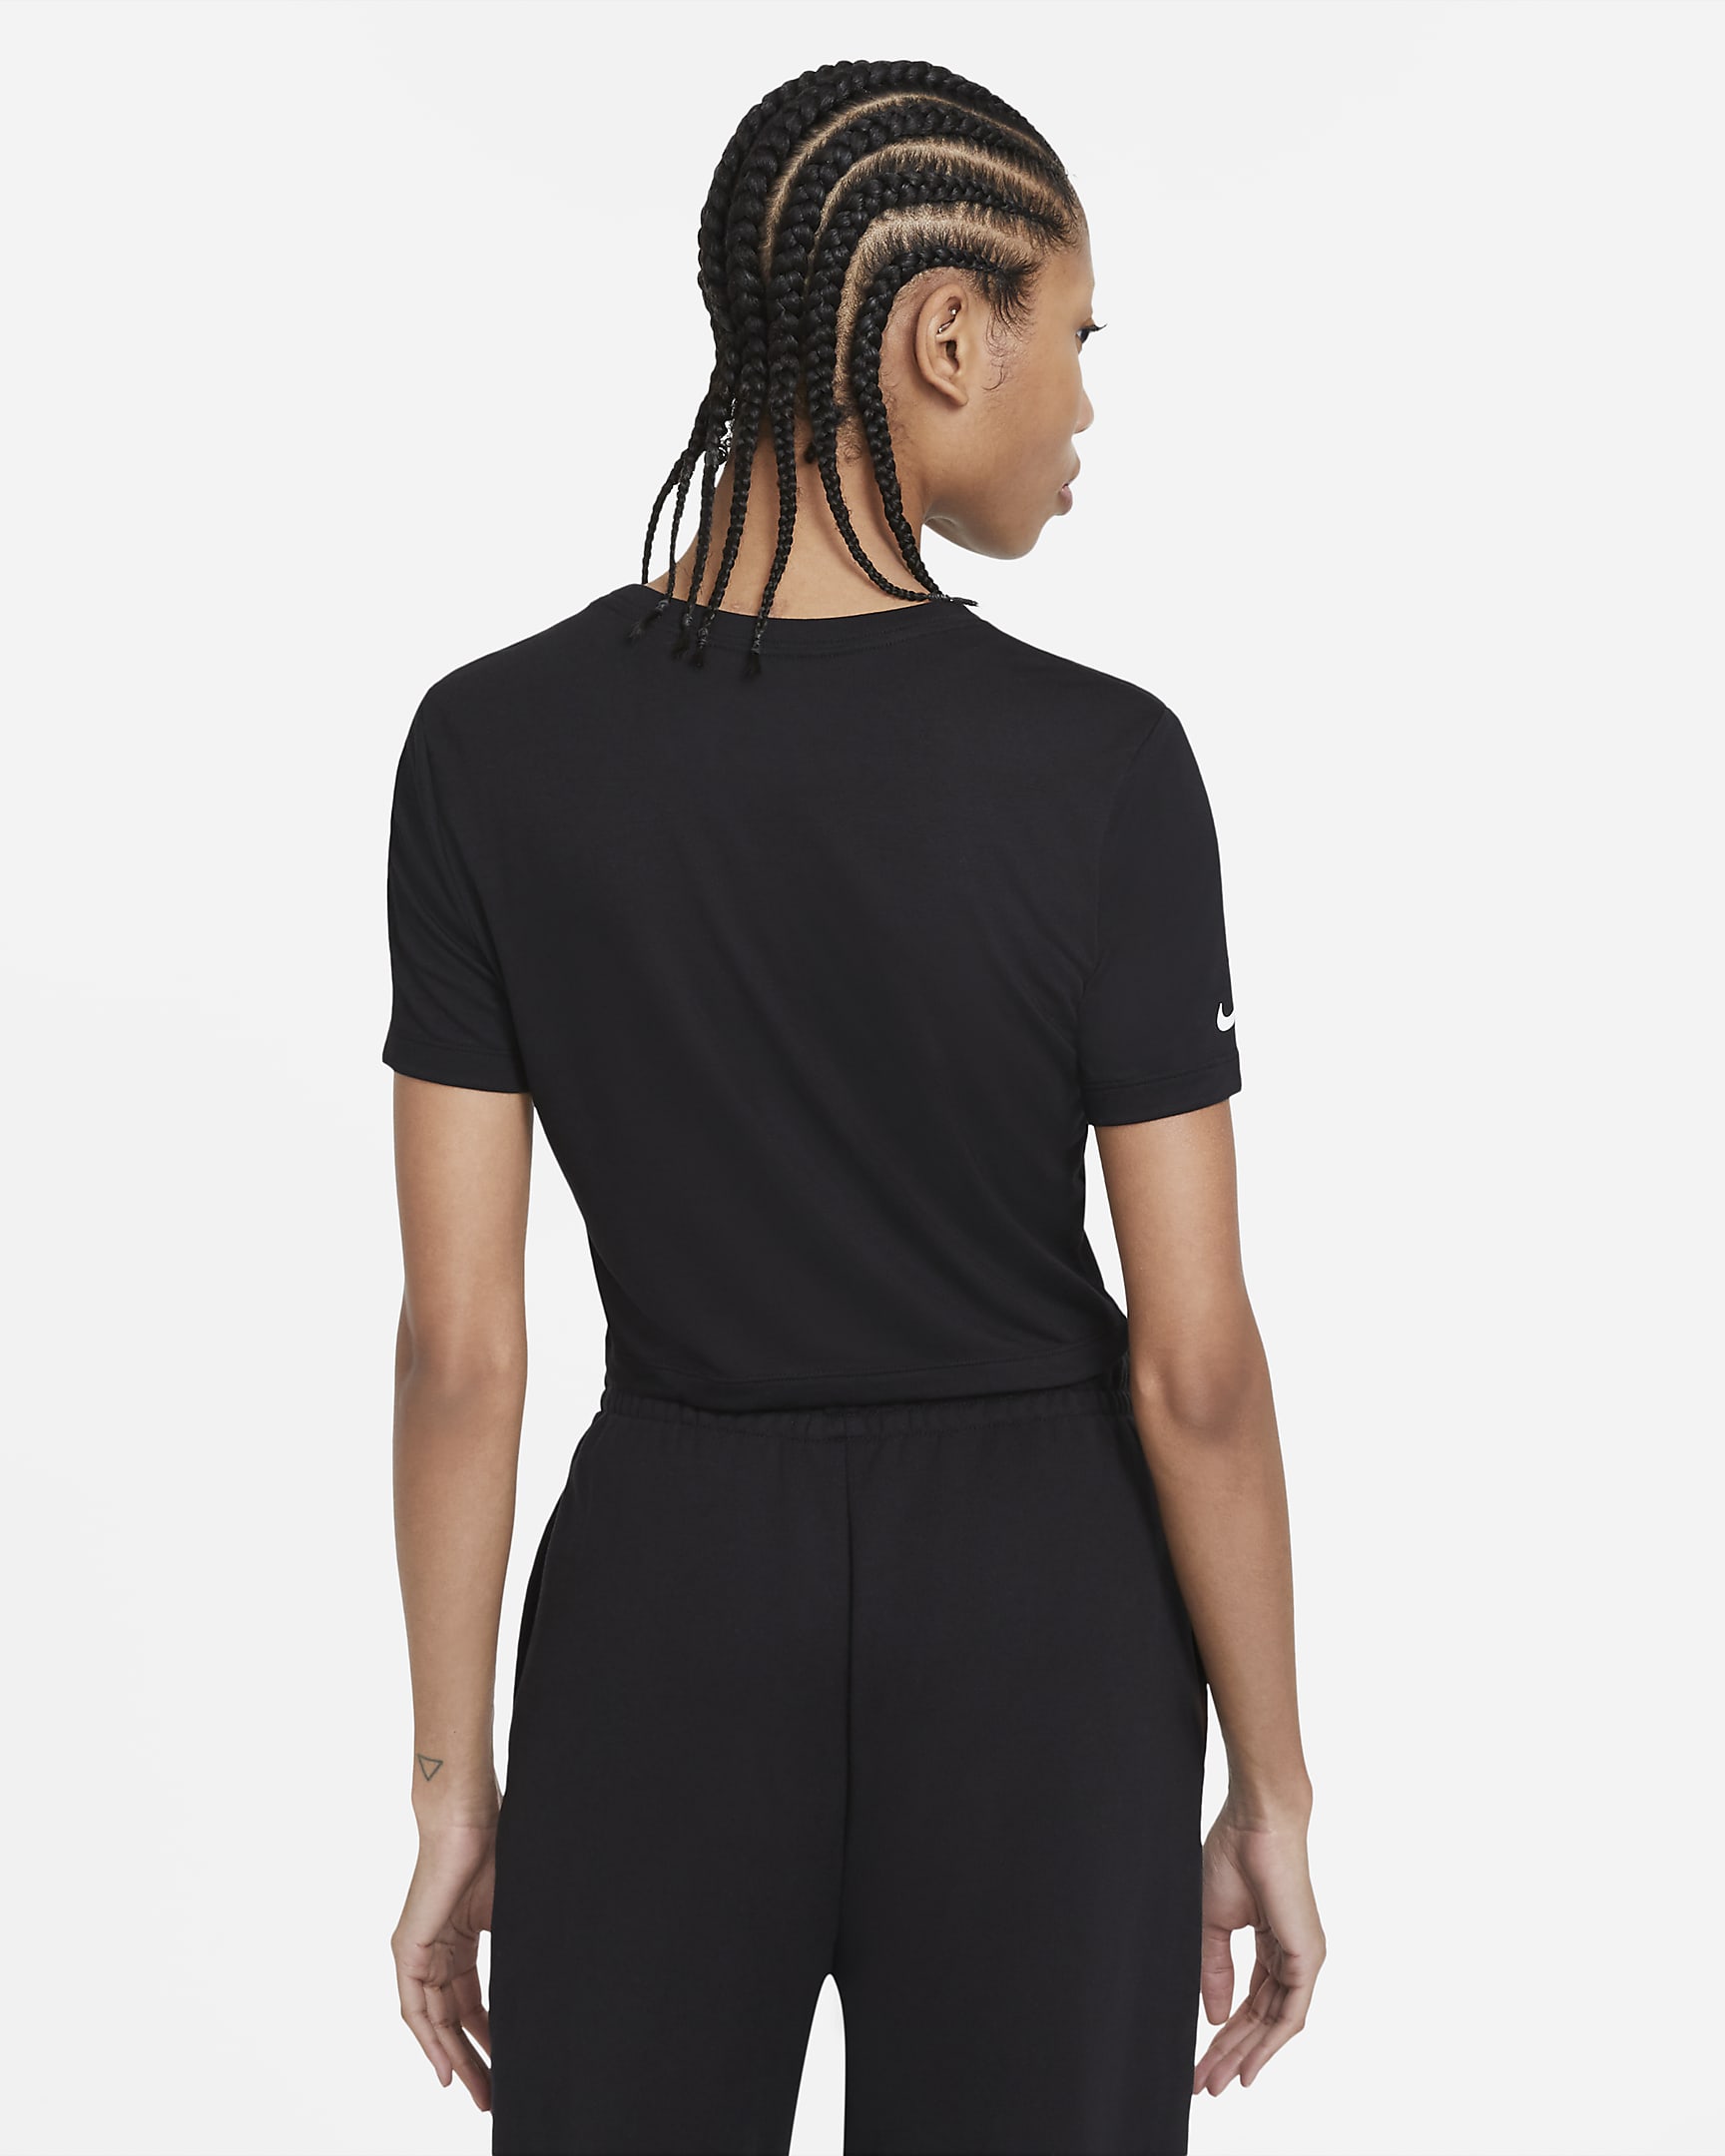 Naomi Osaka Cropped Tennis T-Shirt. Nike CH